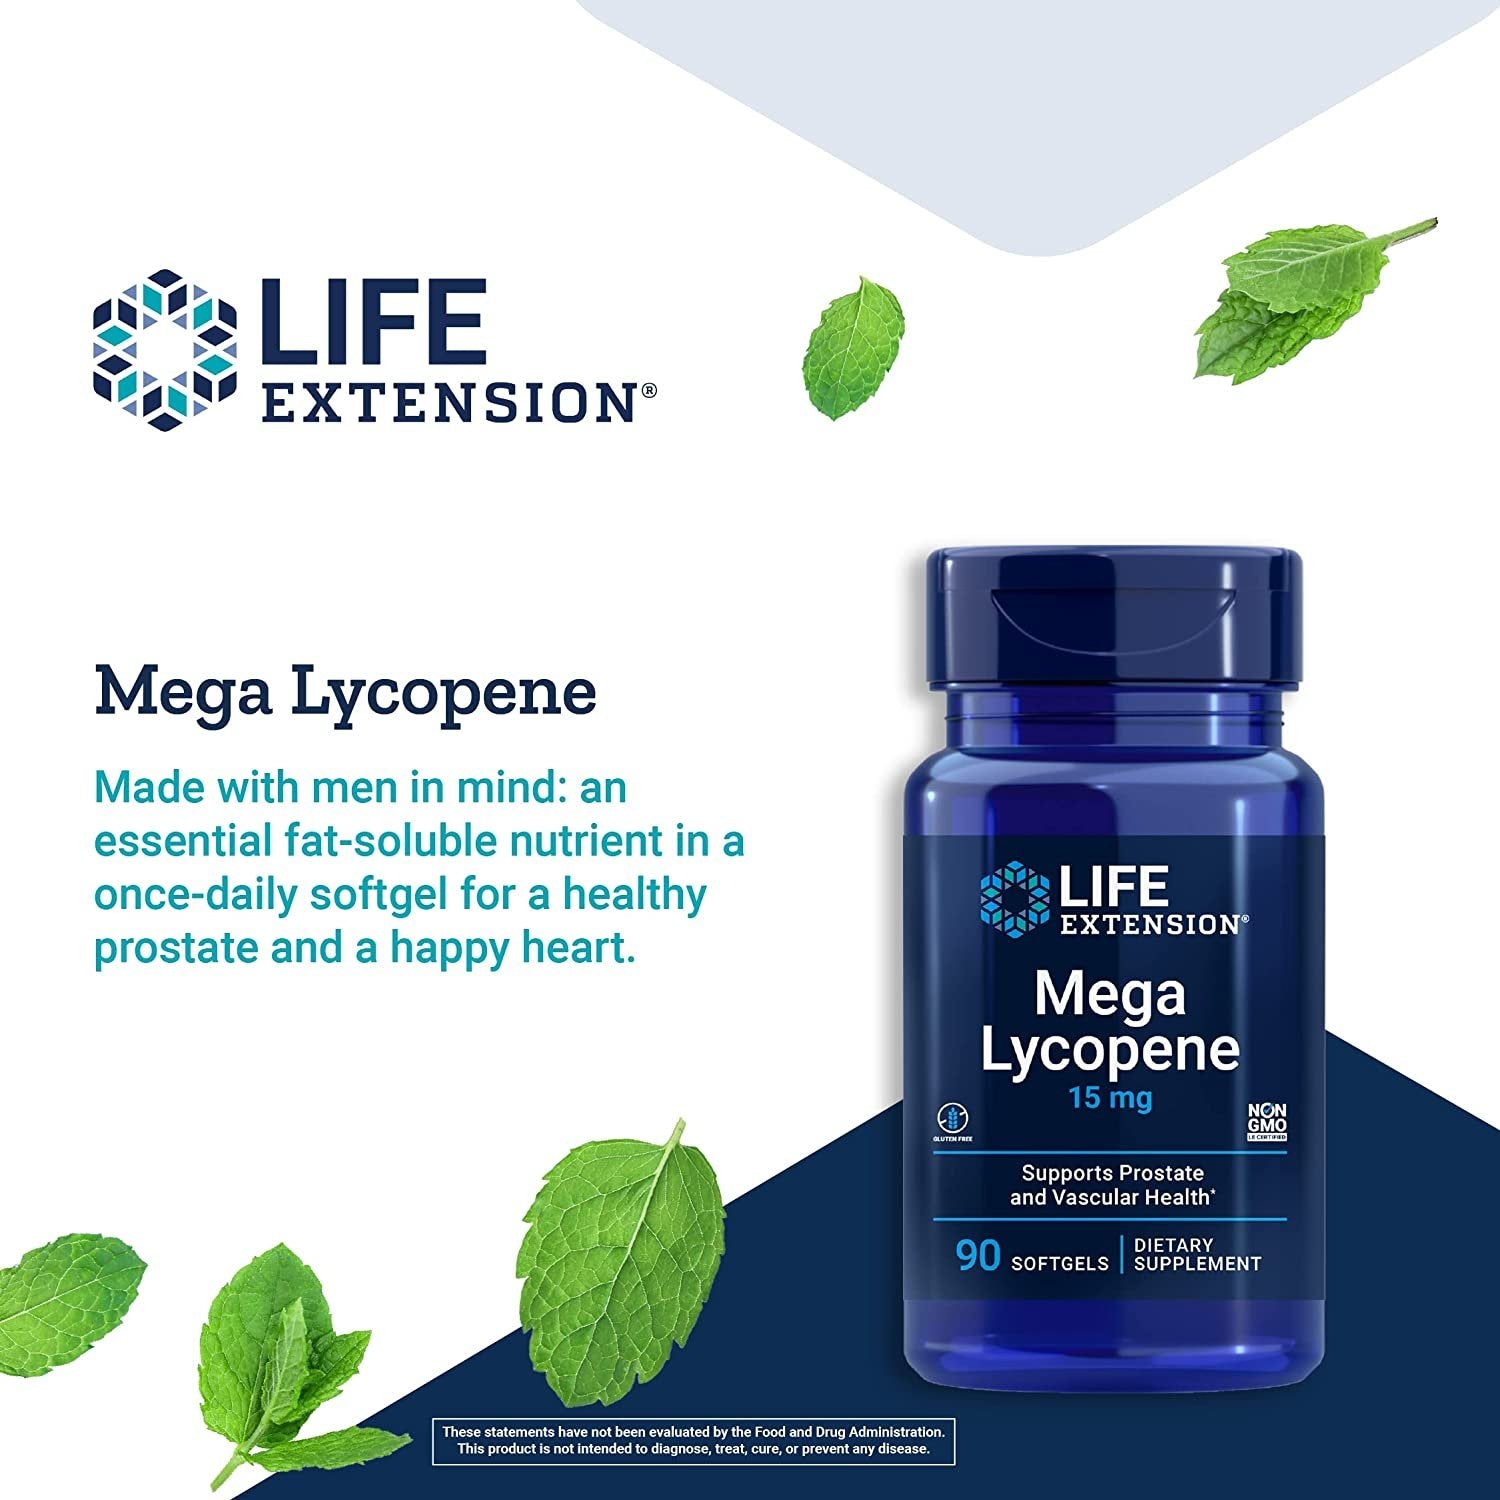 Life Extension Mega Lycopene 15 mg – Prostate & Arterial Health Support – Gluten-Free – Non-GMO – 90 Softgels